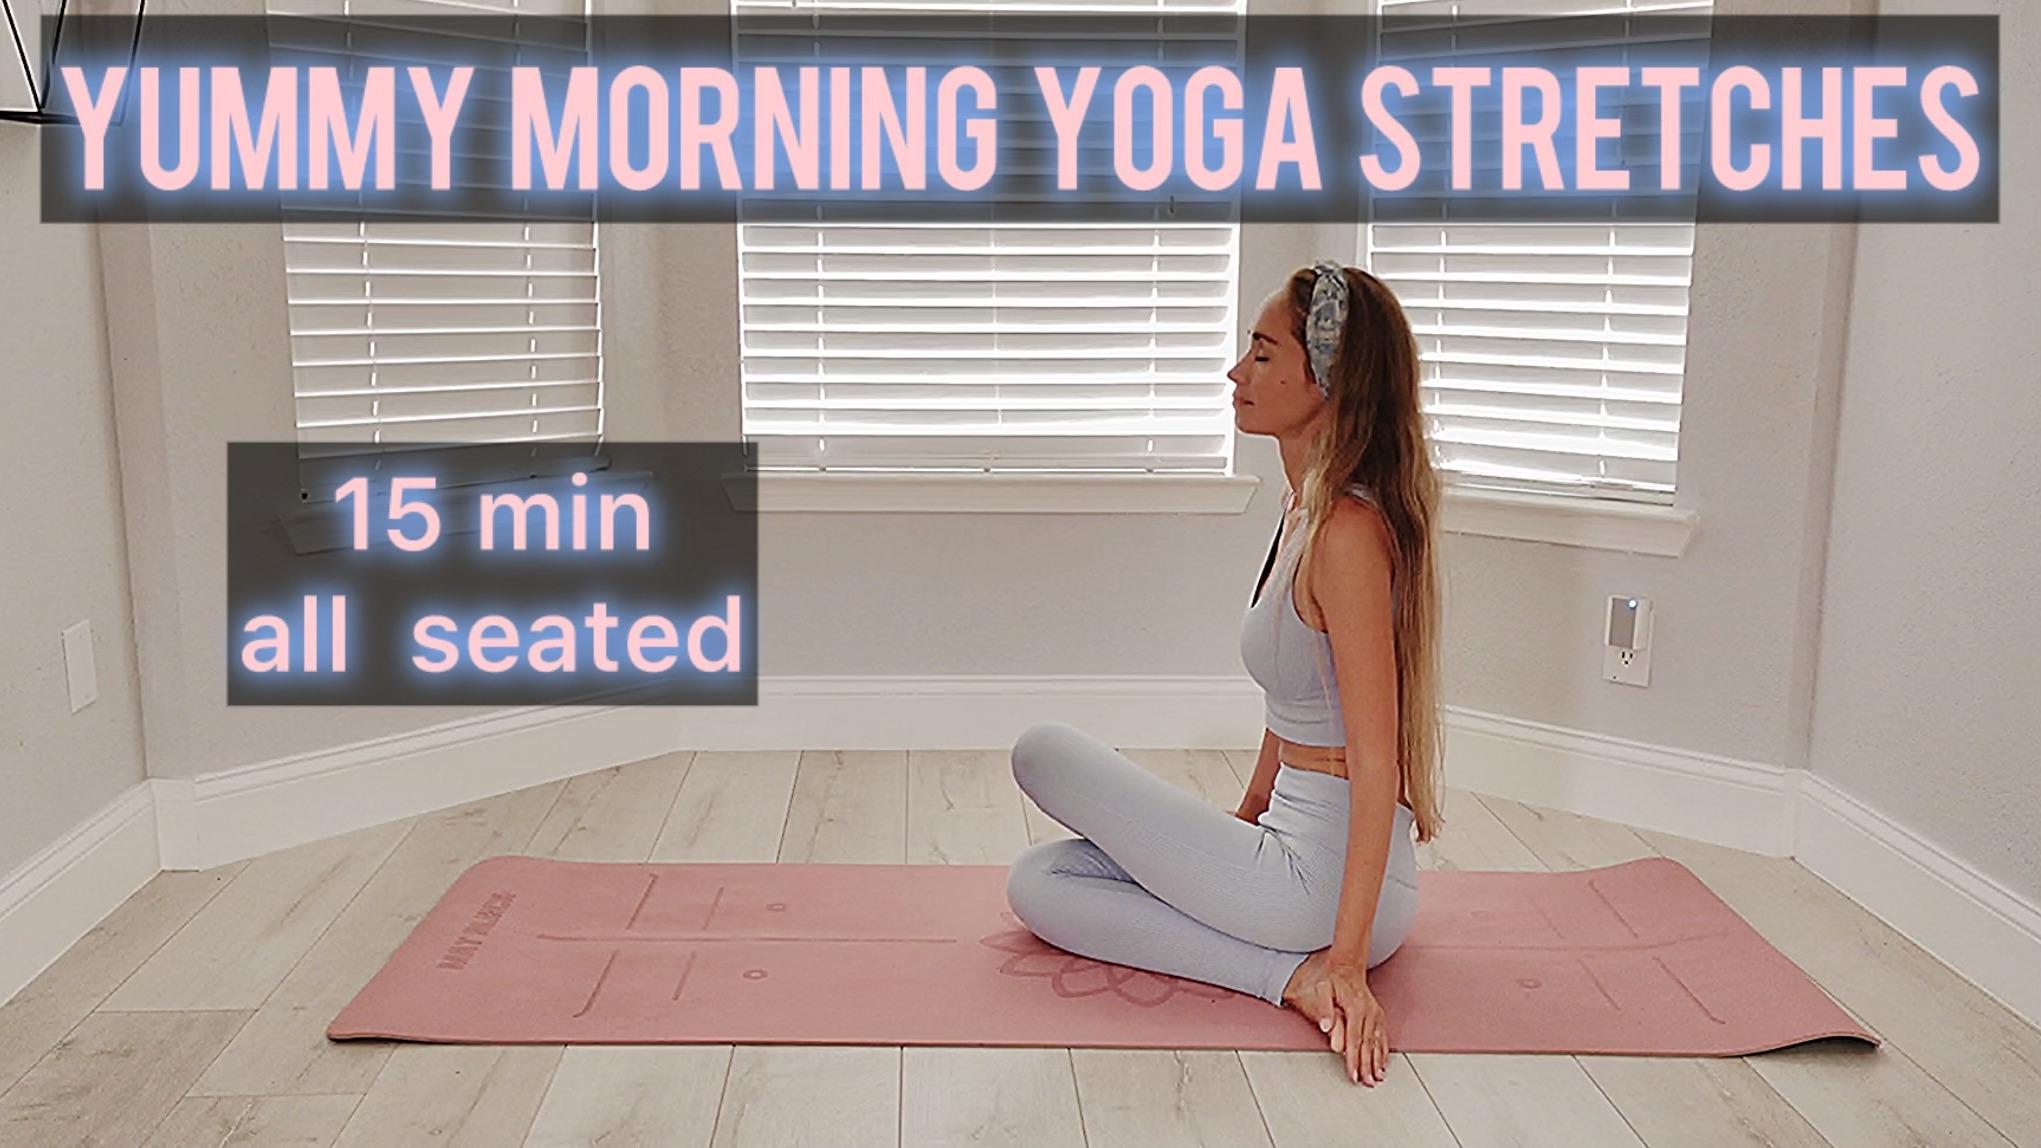 Yummy morning yoga stretches